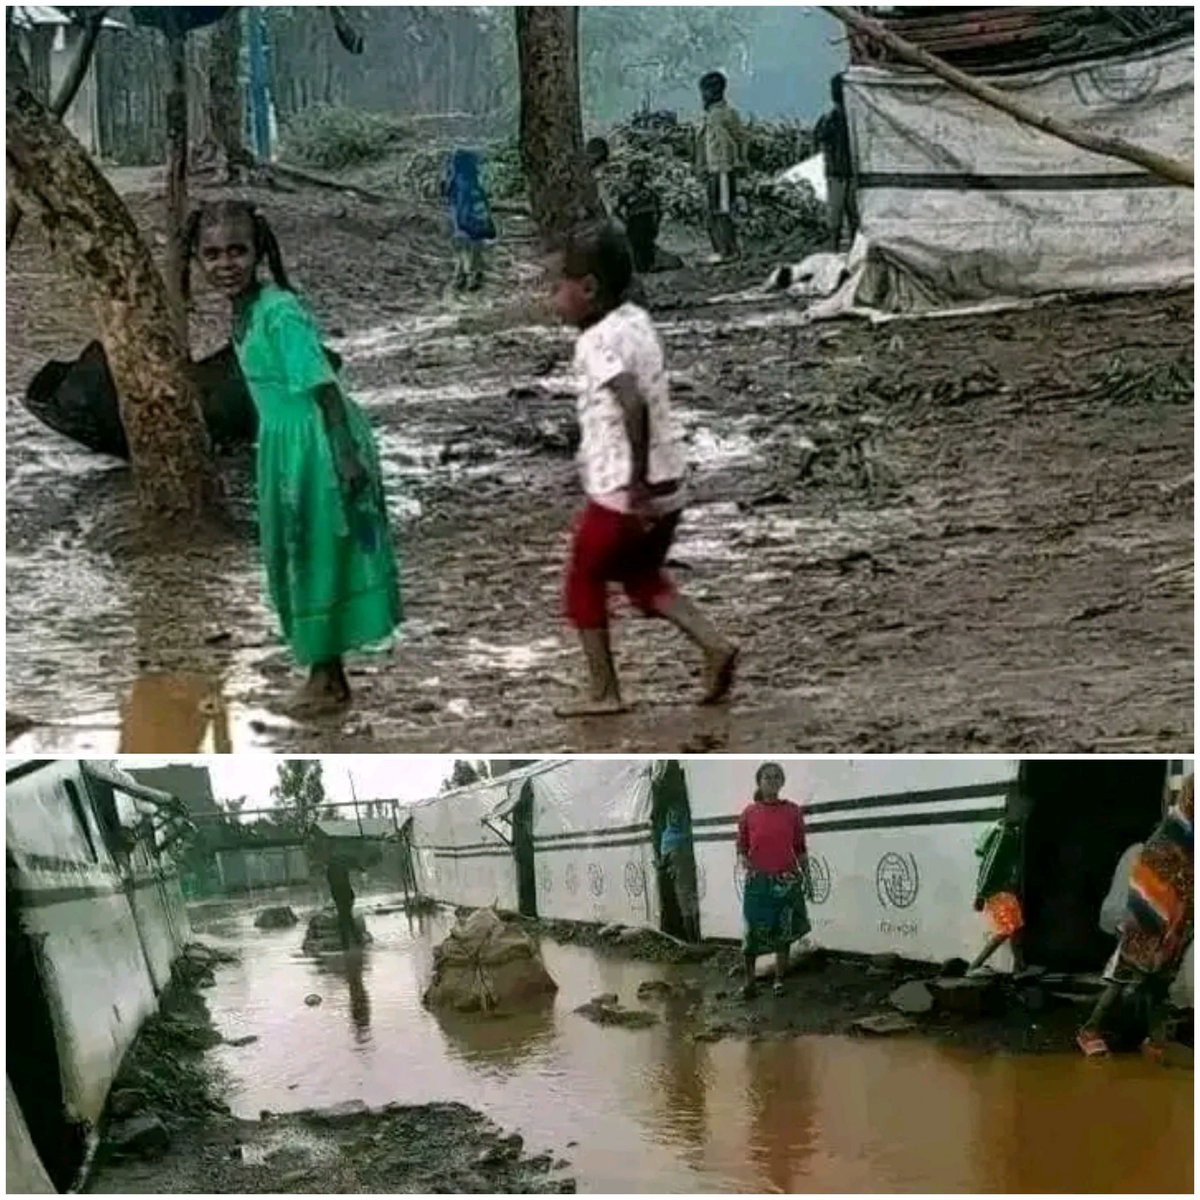 It is really sad💔😥 to see #TegaruIDPs being suffered due to the heavy rains.End #Tigray siege make #TegaruIDPs back to their home.
#AmharaOutOfTigray 
#EriteraOutOfTigray
#UpholdPretoriaAgreement
#ReturnTegaruIDPs 
@hrw @US_AU @SecBlinken @amnesty @EU_Commission @hrw